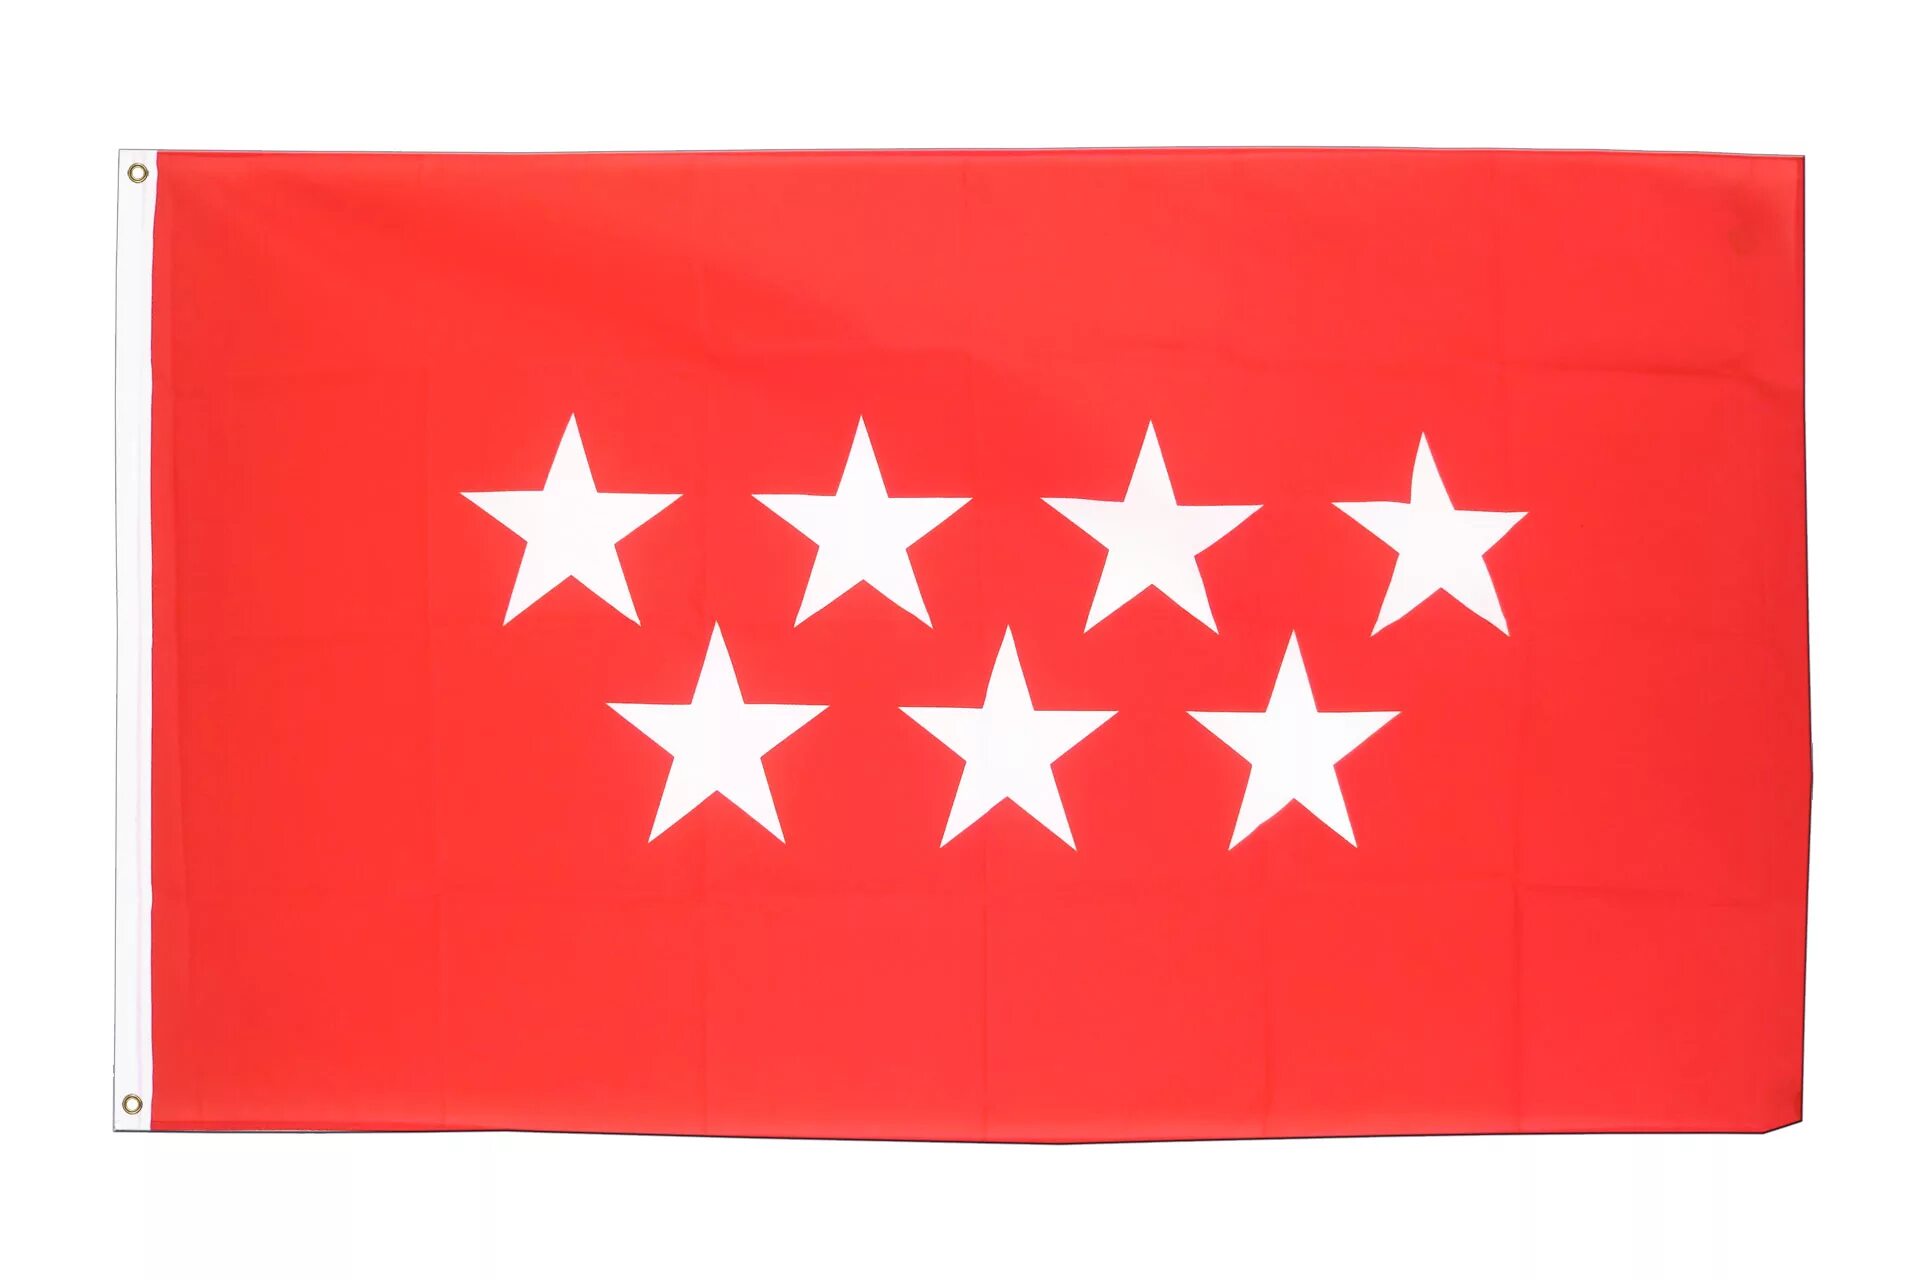 Флаги со звездами какие. Флаг со звездой. Флаг красный. Красный флаг со звездой. Красный флаг со звездочками.